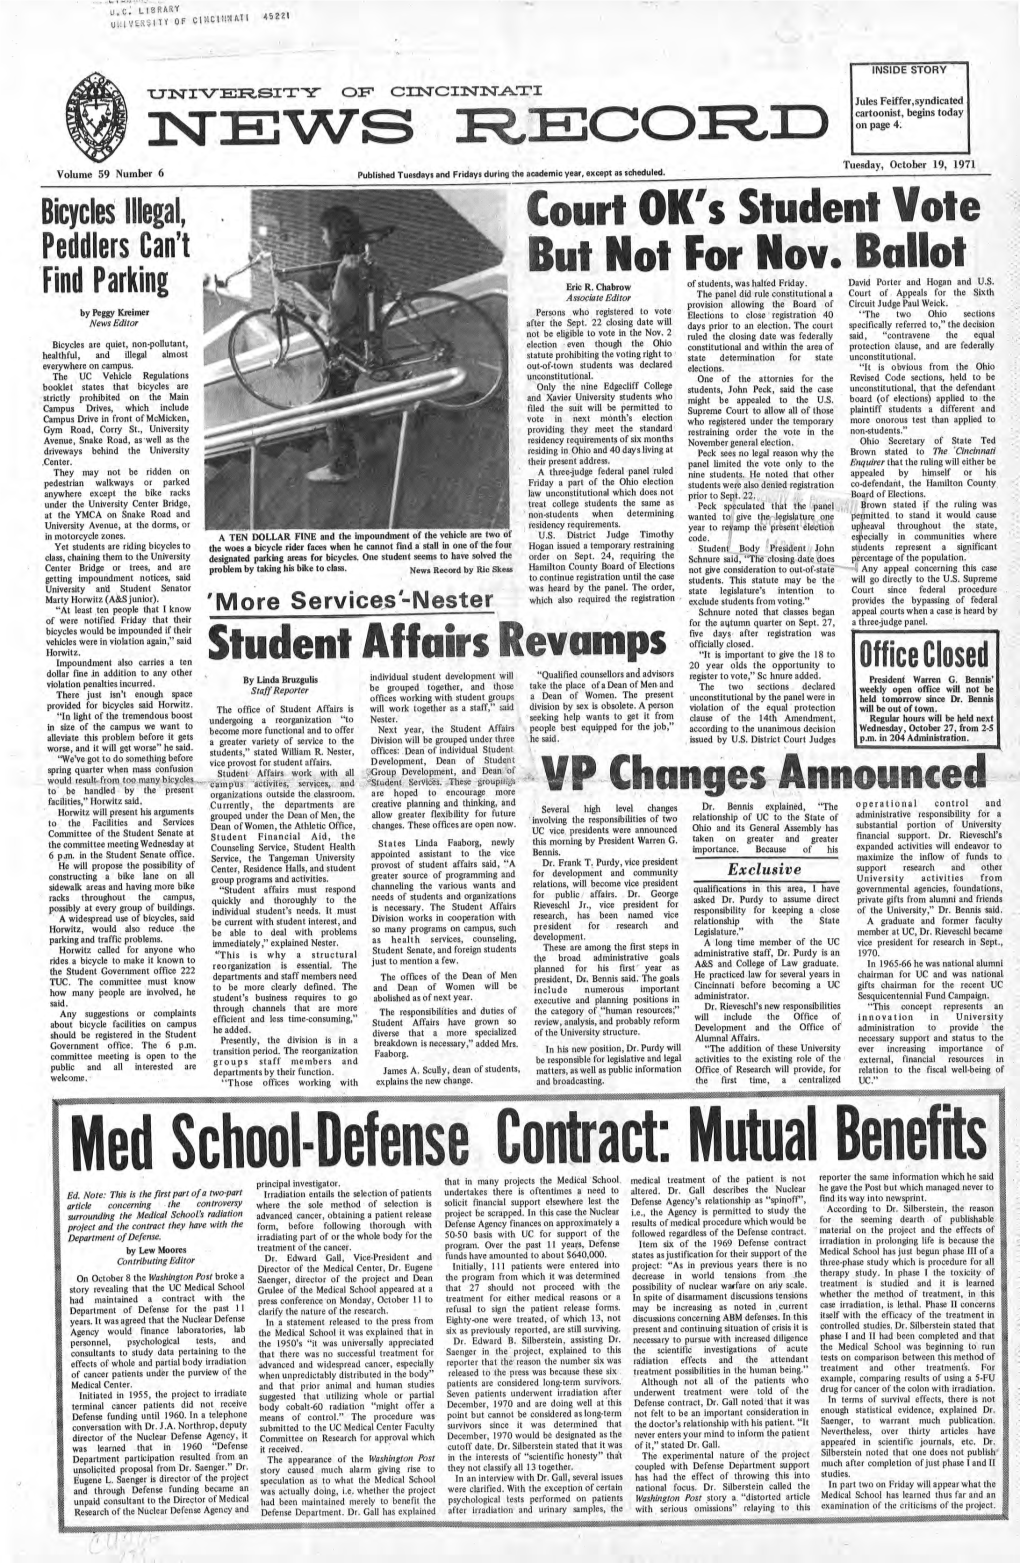 University of Cincinnati News Record. Tuesday, October 19, 1971. Vol. 59